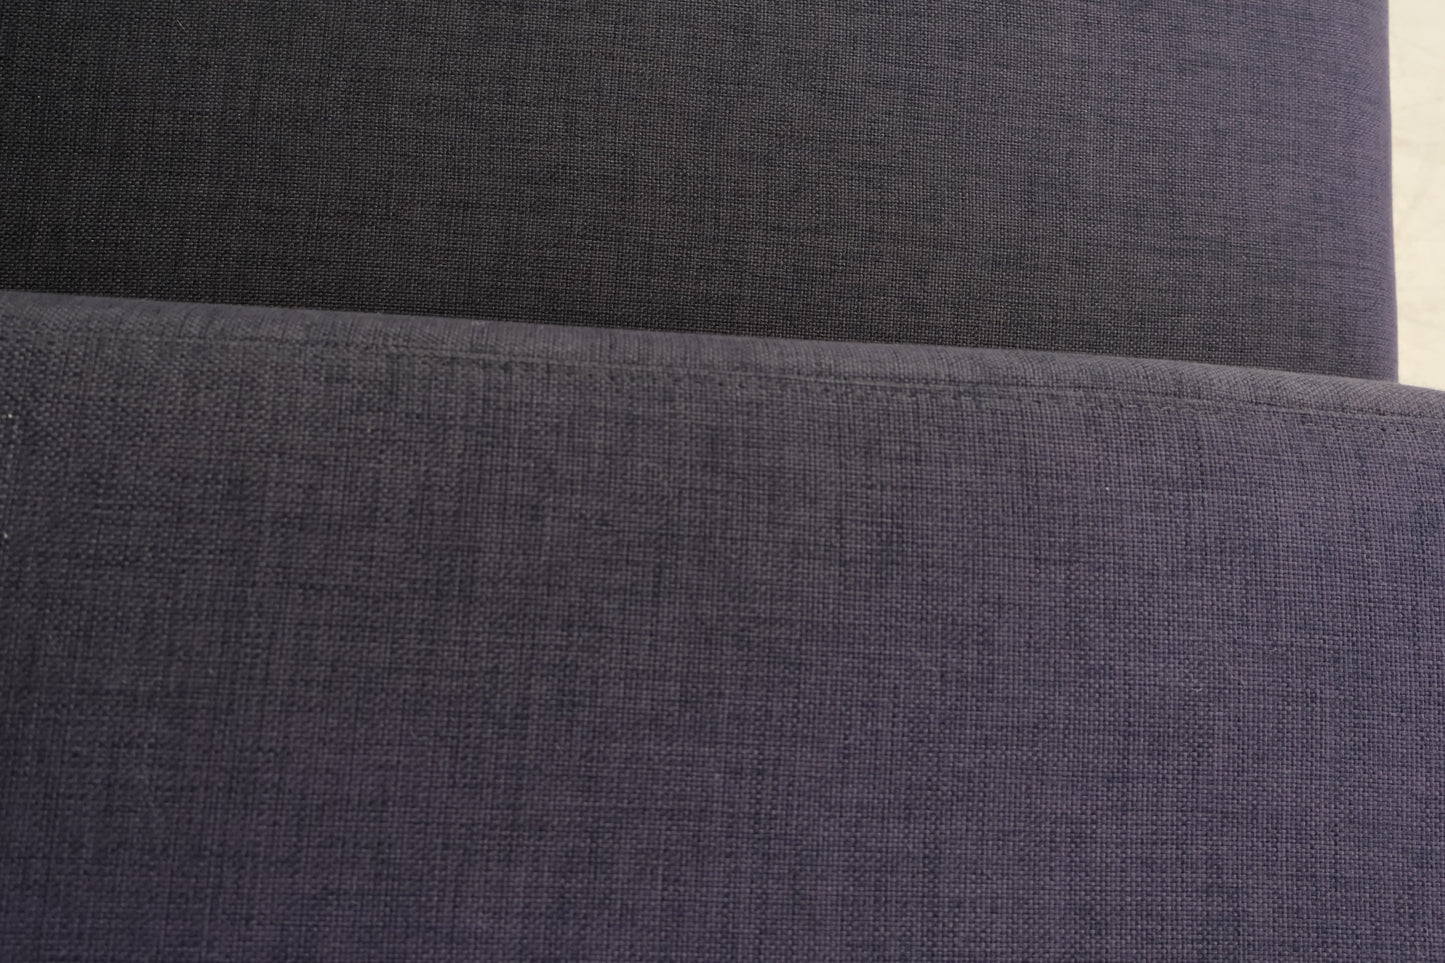 Nyrenset | Lilla Bolia 3-seter sofa